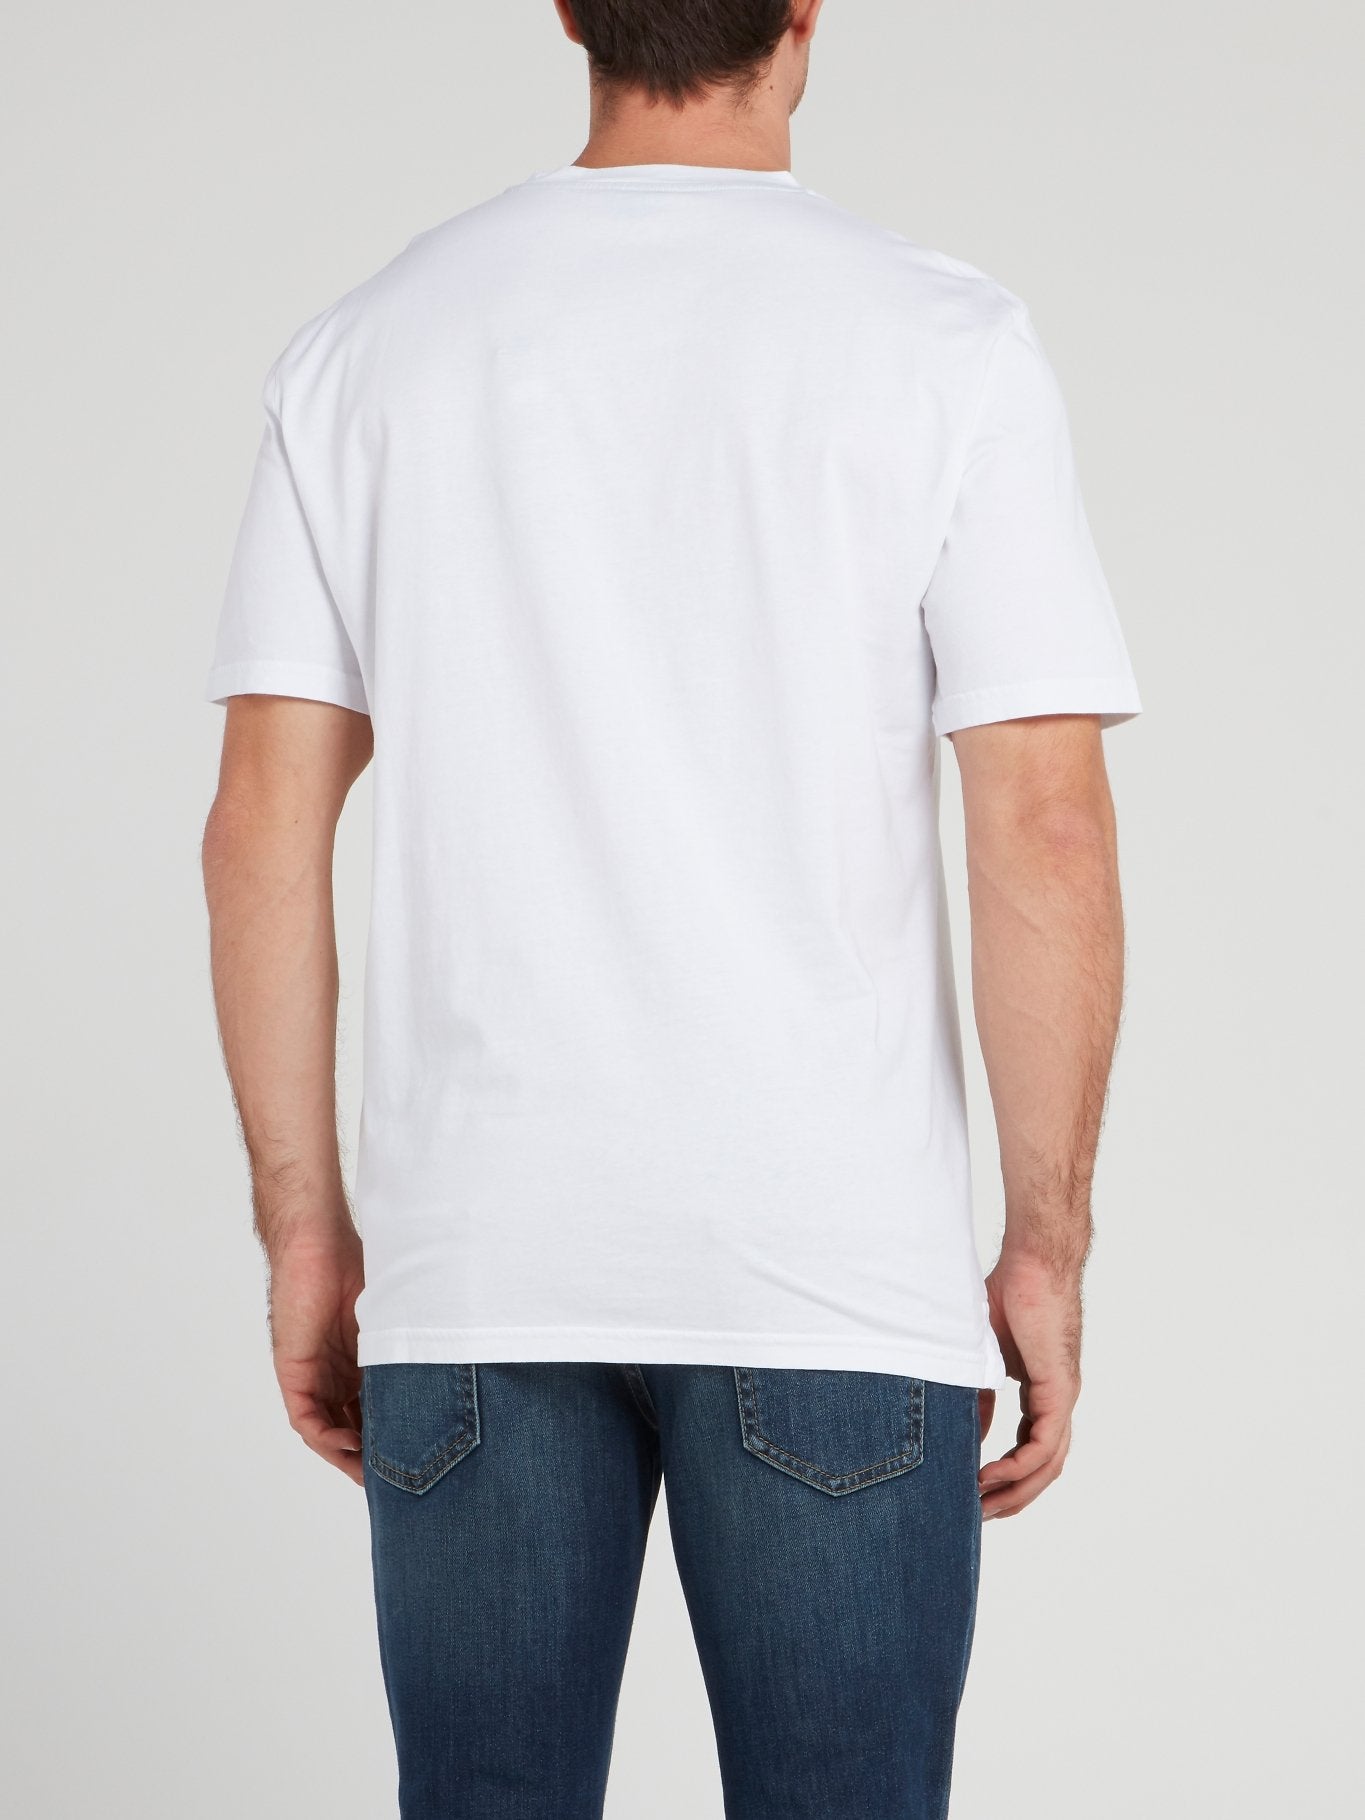 White Sketch Printed T-Shirt